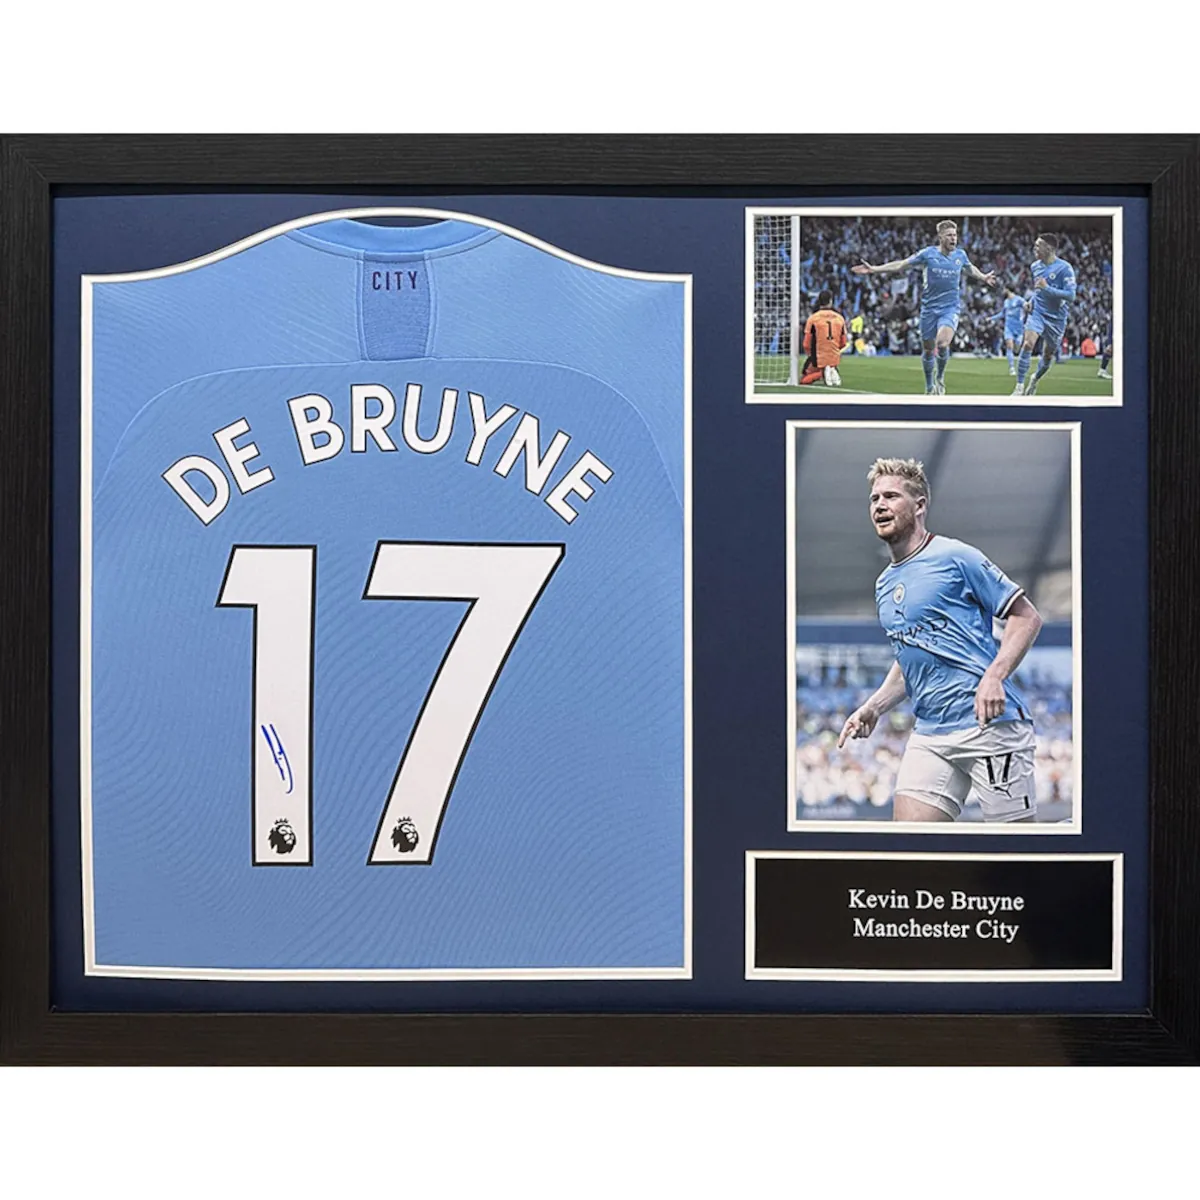 TM-02720 Manchester City F.C. Kevin De Bruyne Framed Signed 2019-2020 Season Replica Football Shirt